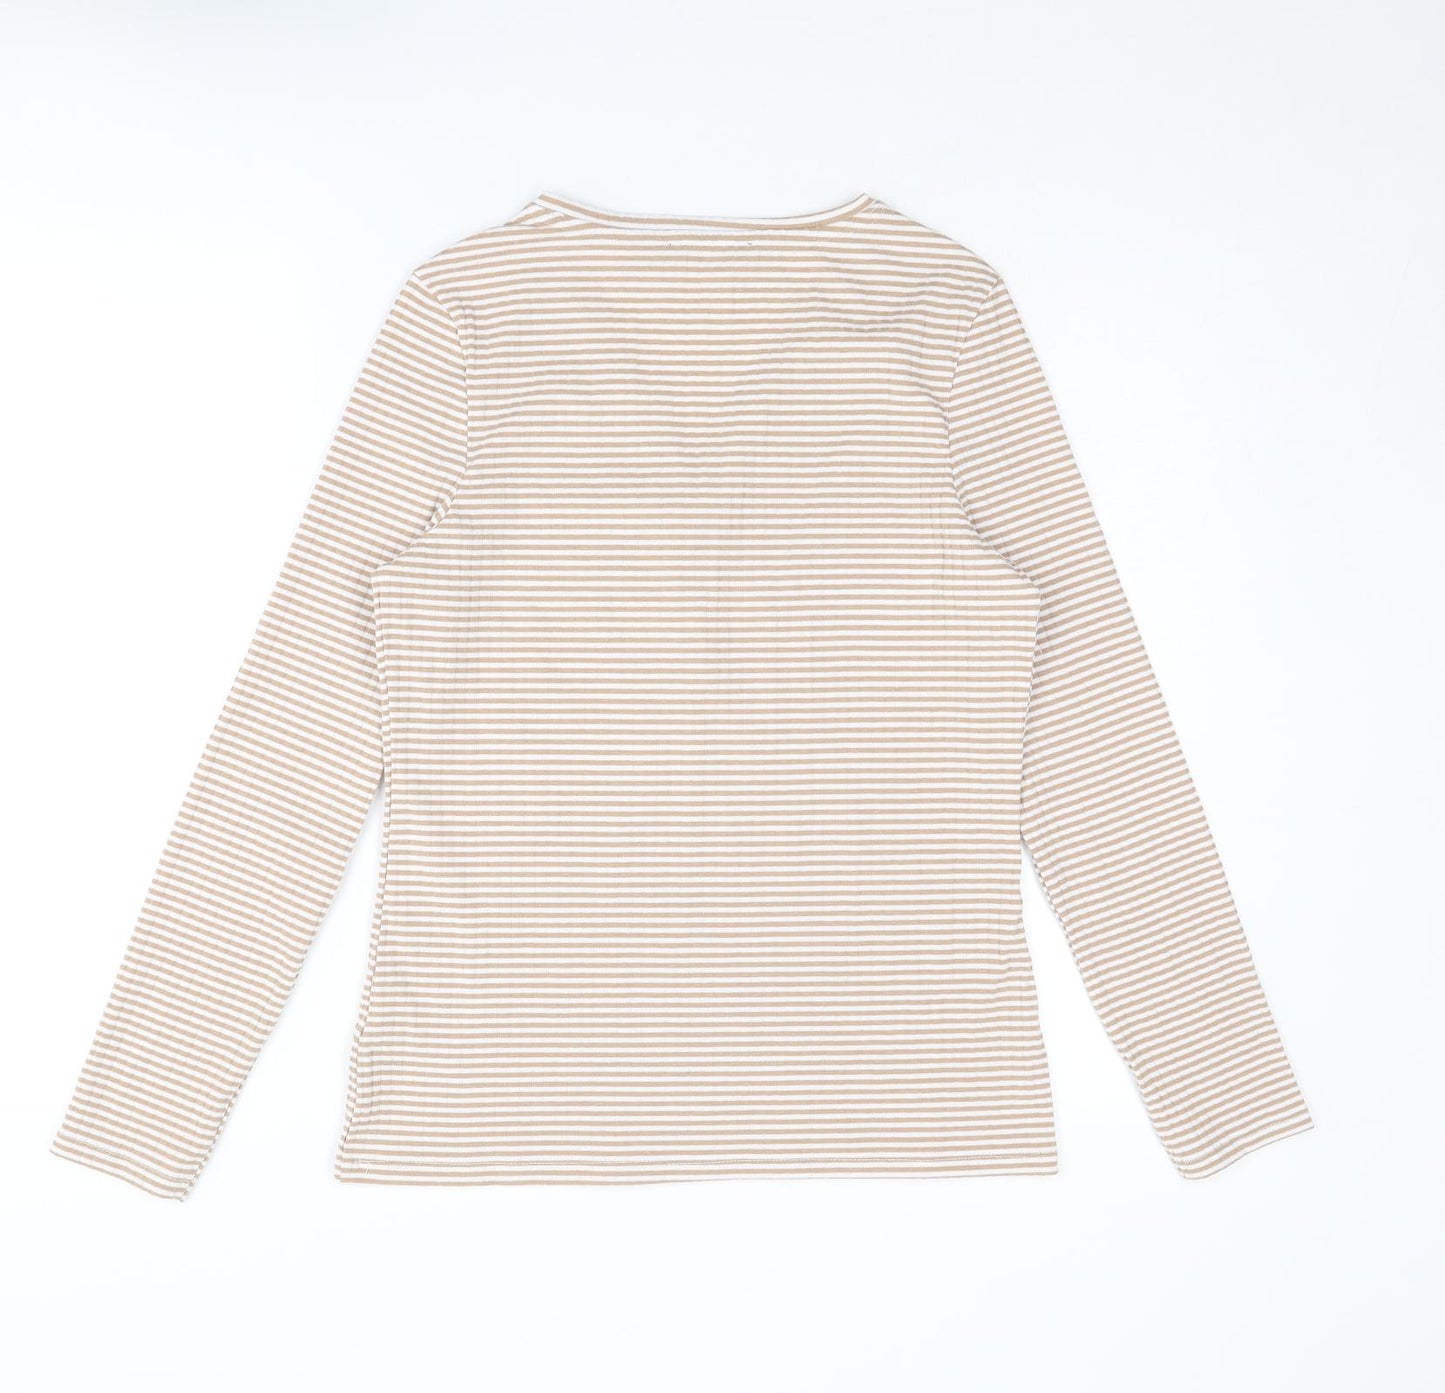 Marks and Spencer Womens Beige Striped Polyester Basic T-Shirt Size 12 V-Neck